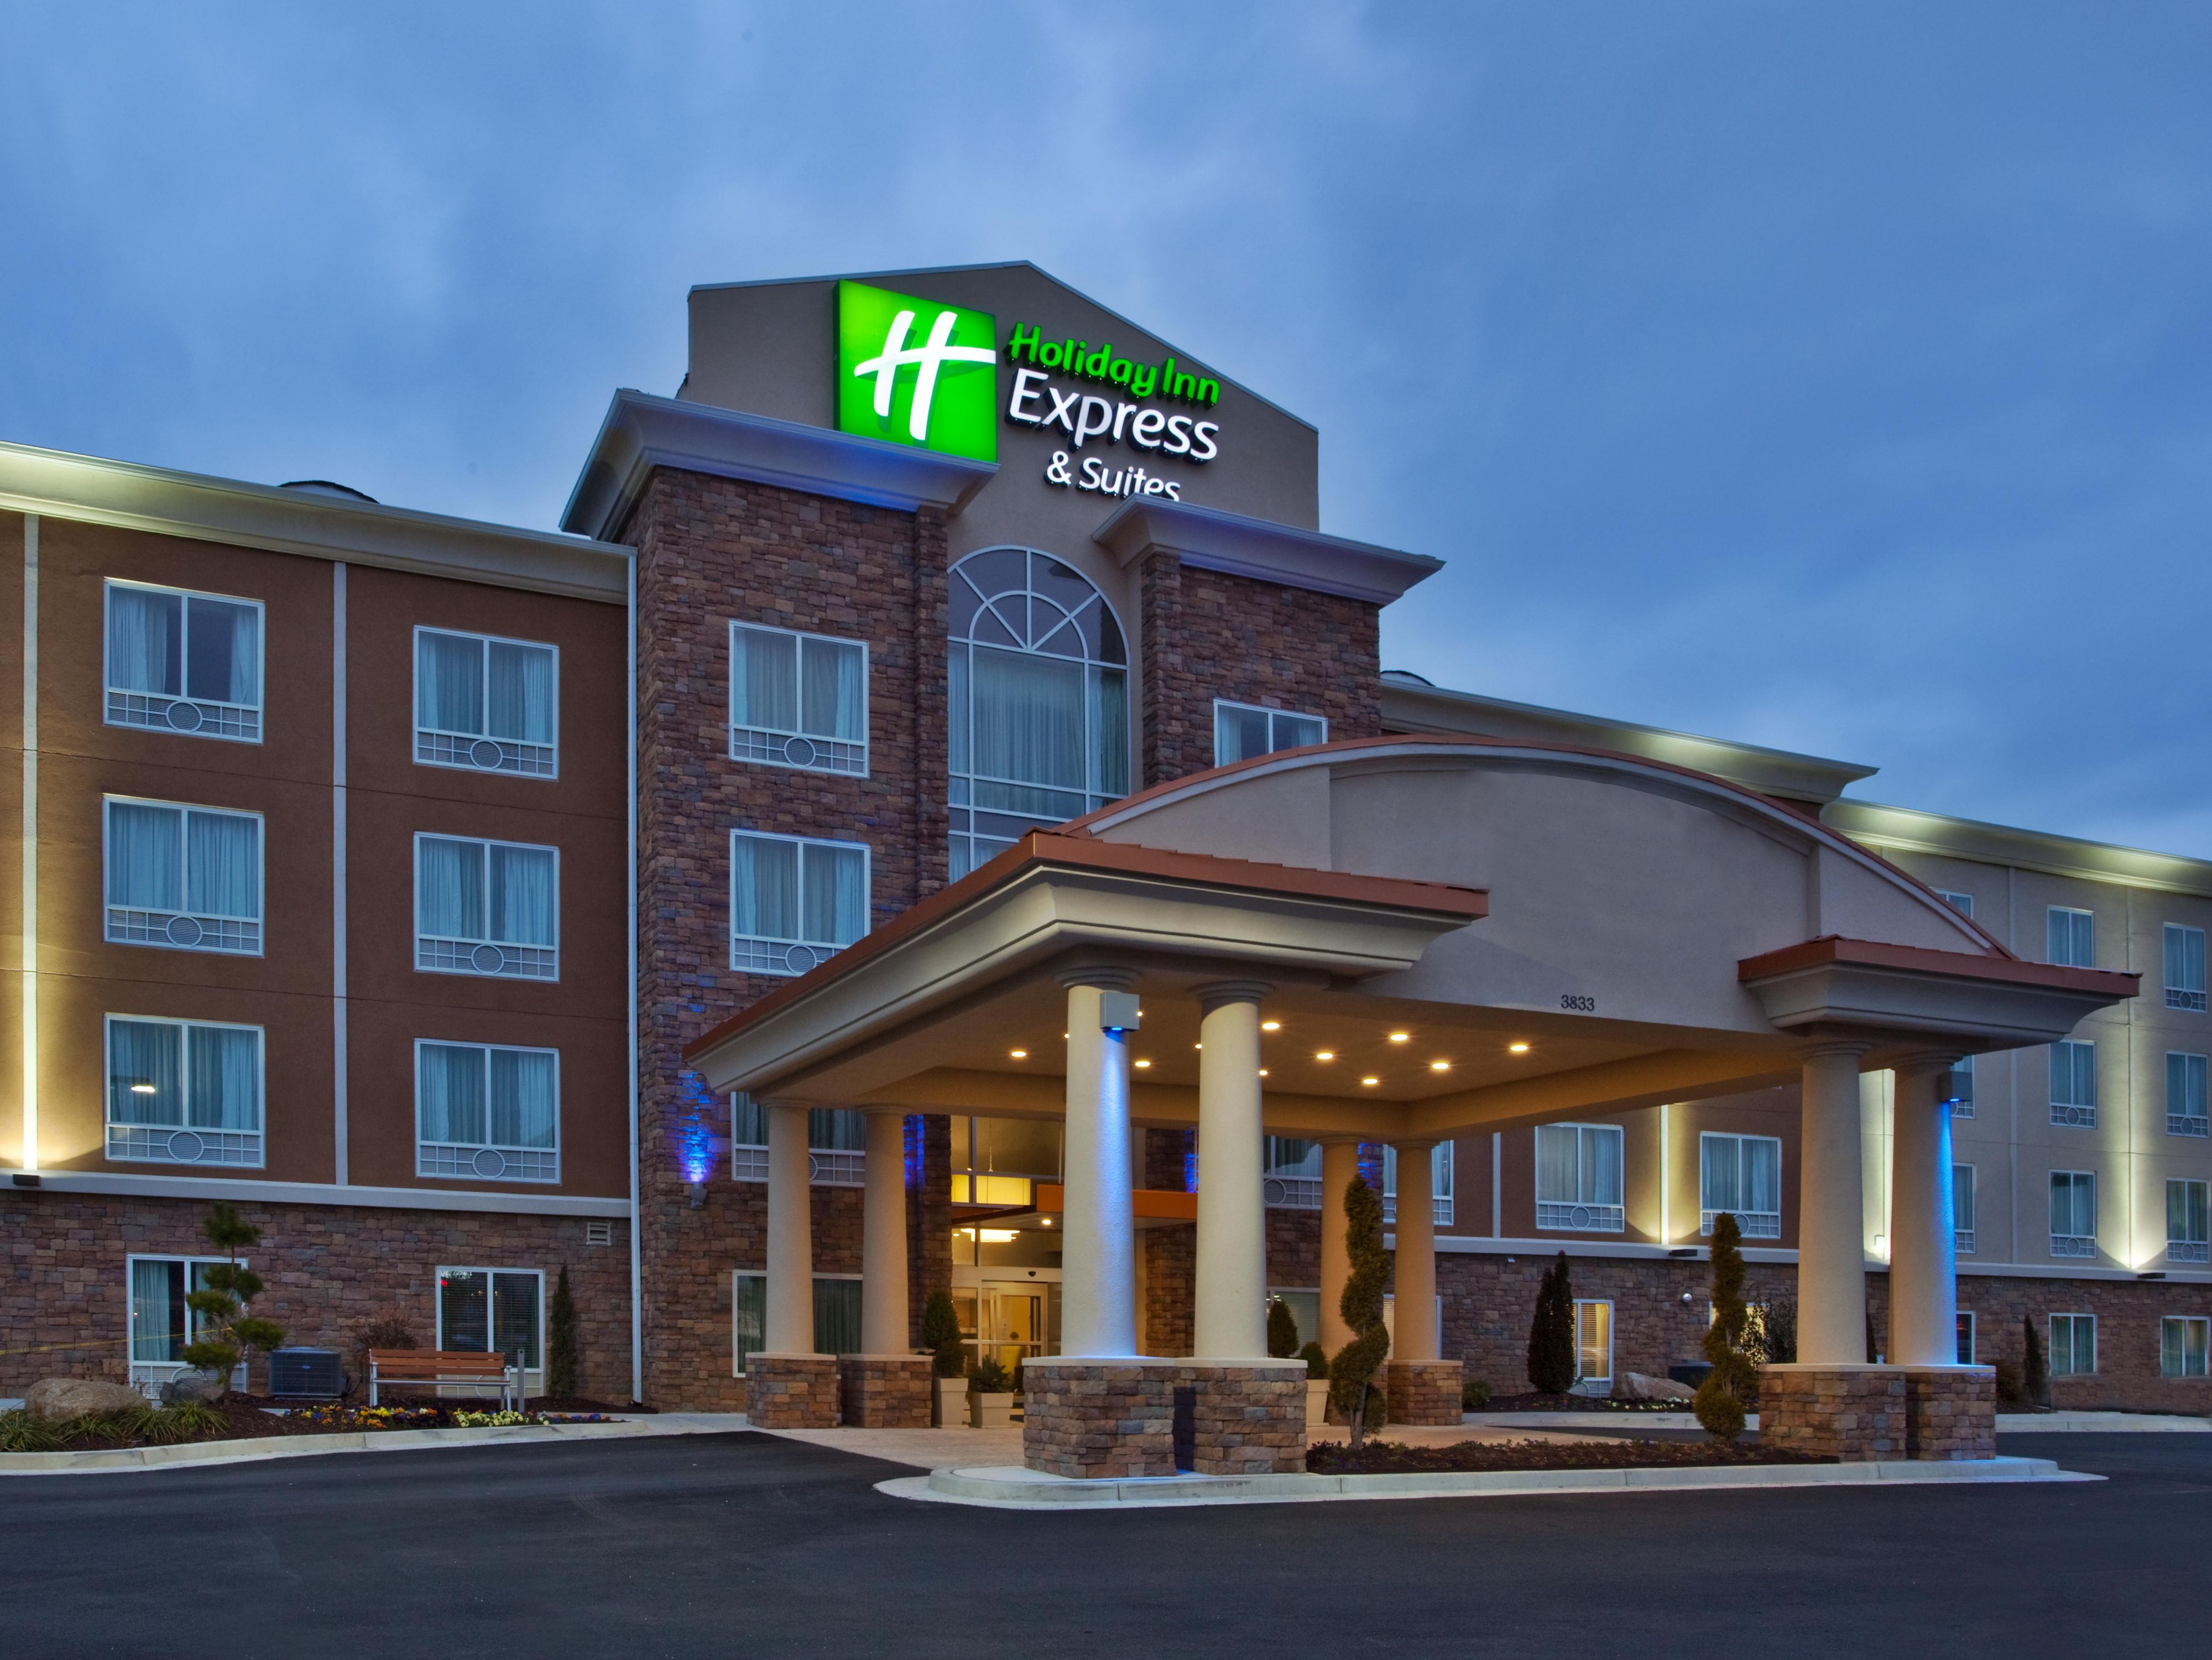 Holiday Inn Express And Suites Atlanta 2533239542 4x3